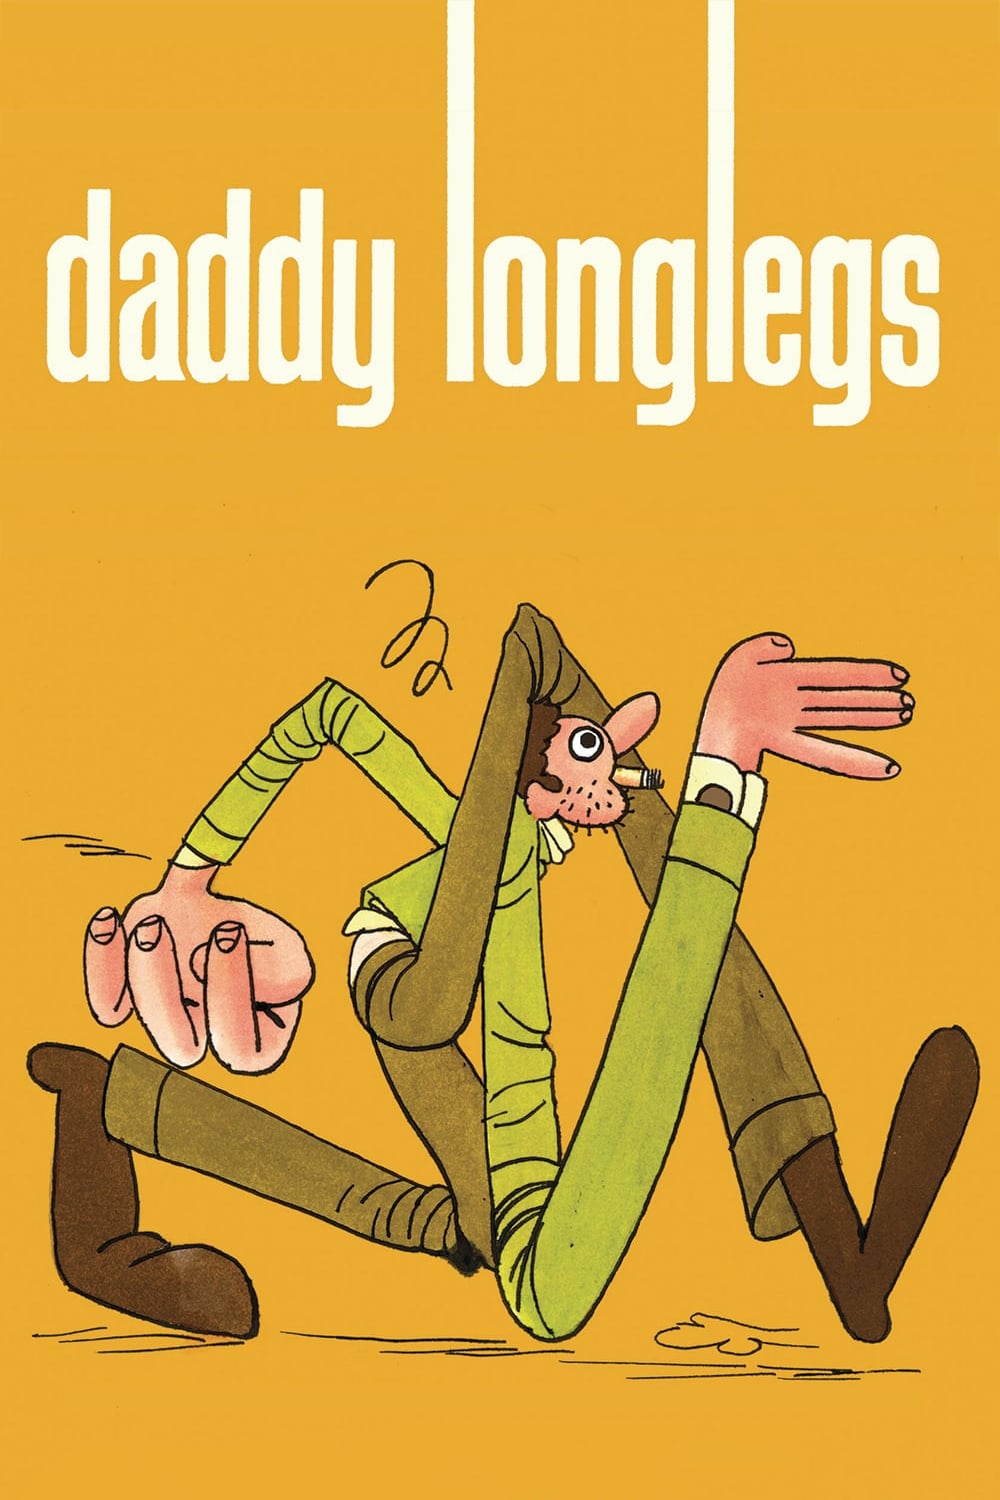 Daddy Longlegs (2009)